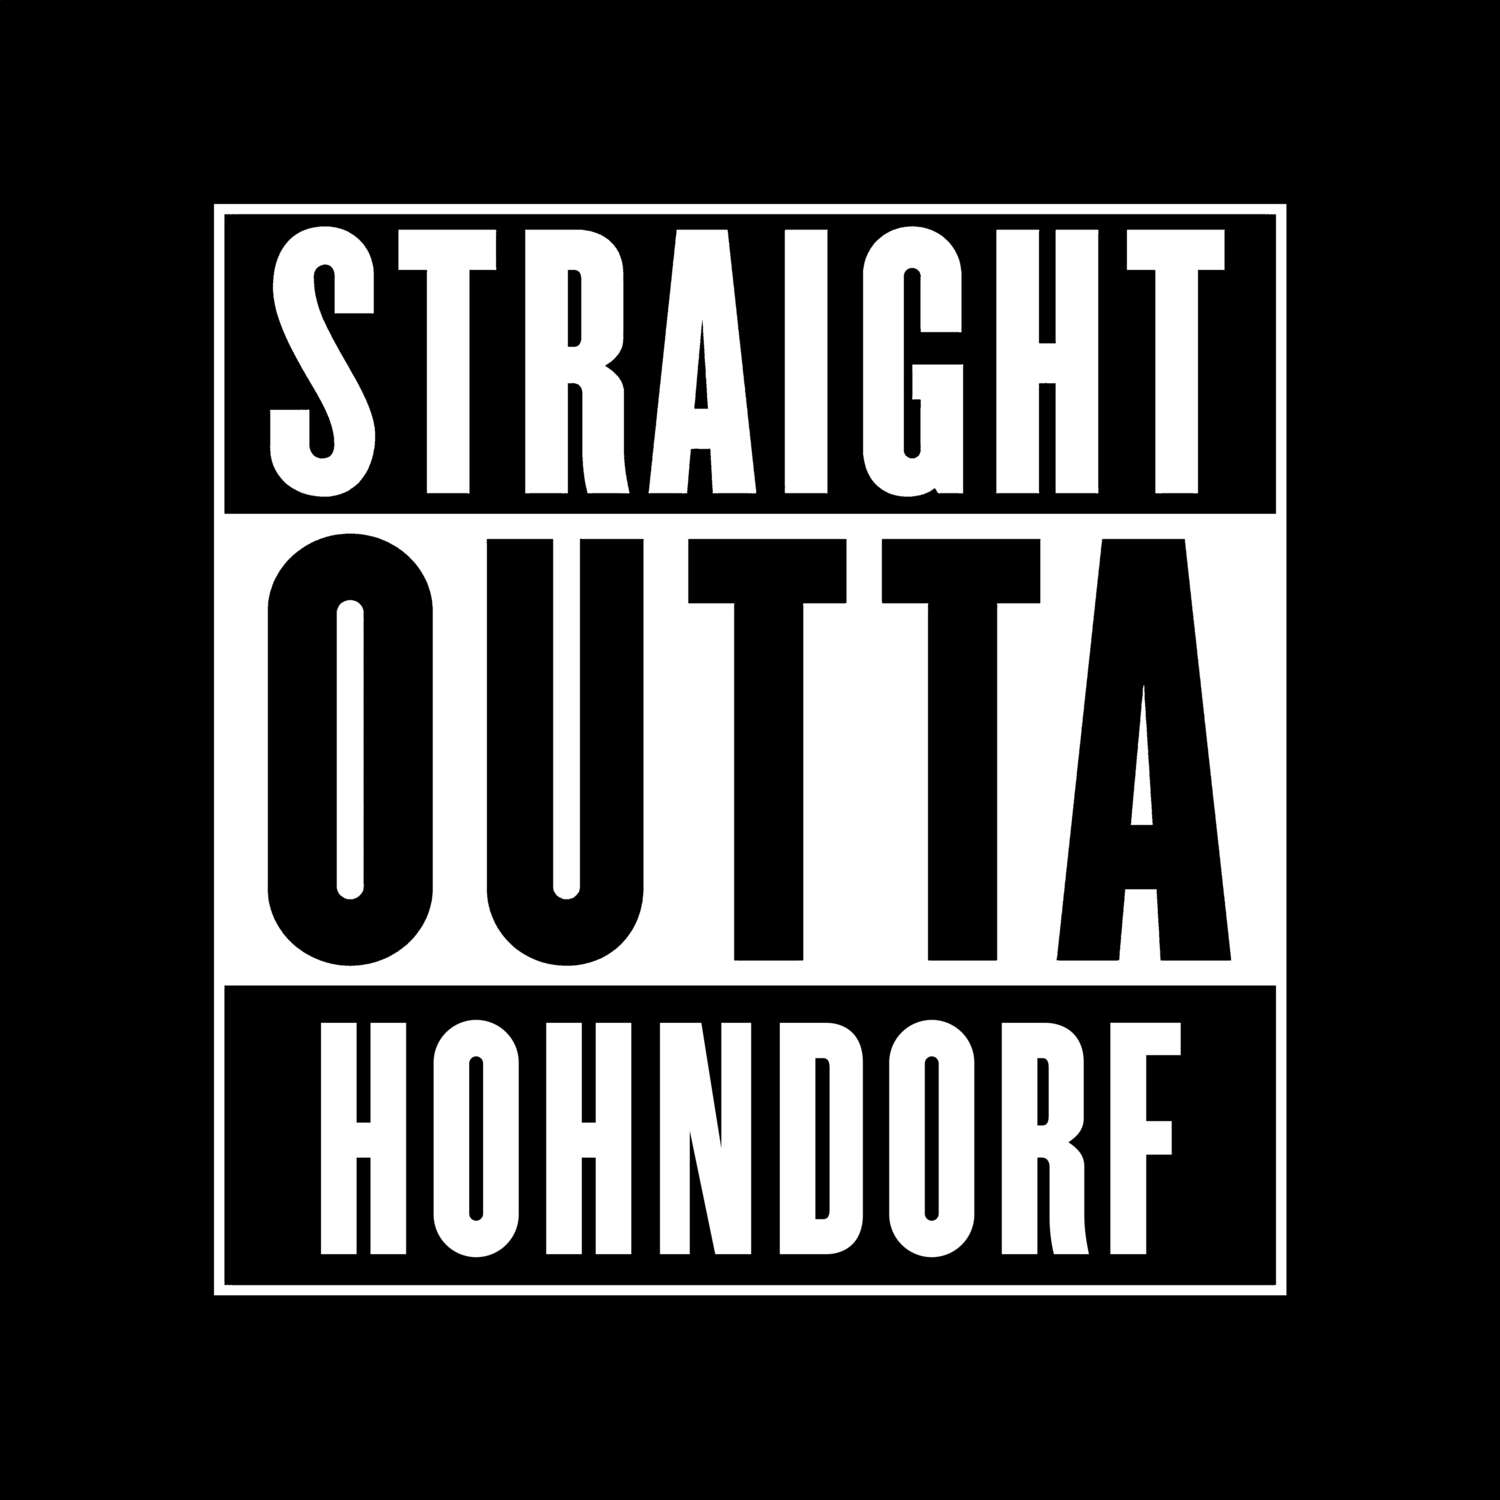 Hohndorf T-Shirt »Straight Outta«